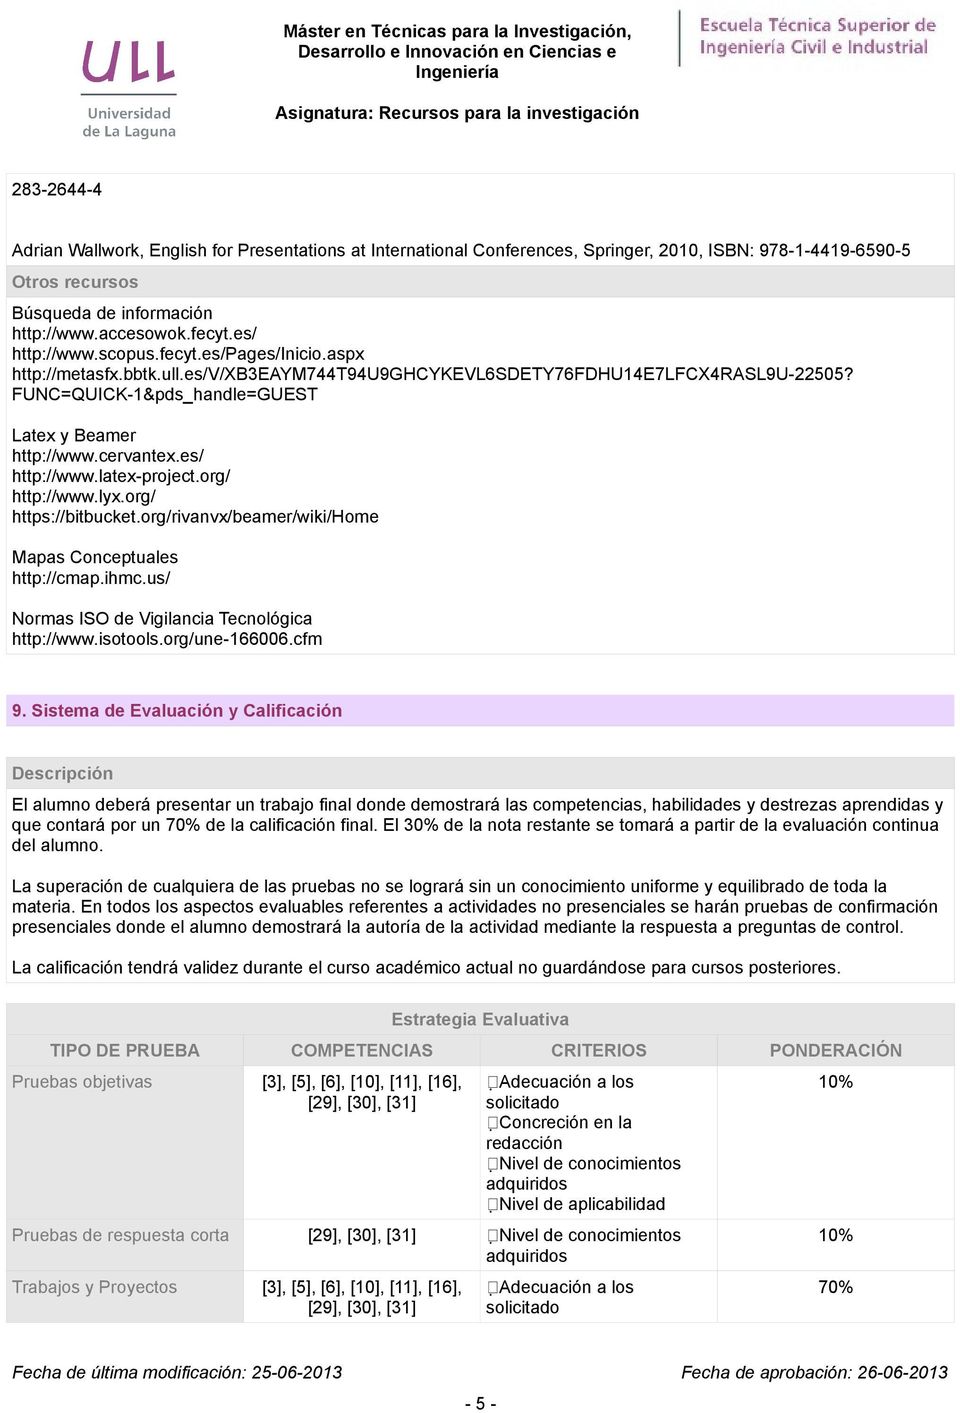 cervantex.es/ http://www.latex-project.org/ http://www.lyx.org/ https://bitbucket.org/rivanvx/beamer/wiki/home Mapas Conceptuales http://cmap.ihmc.us/ Normas ISO de Vigilancia Tecnológica http://www.